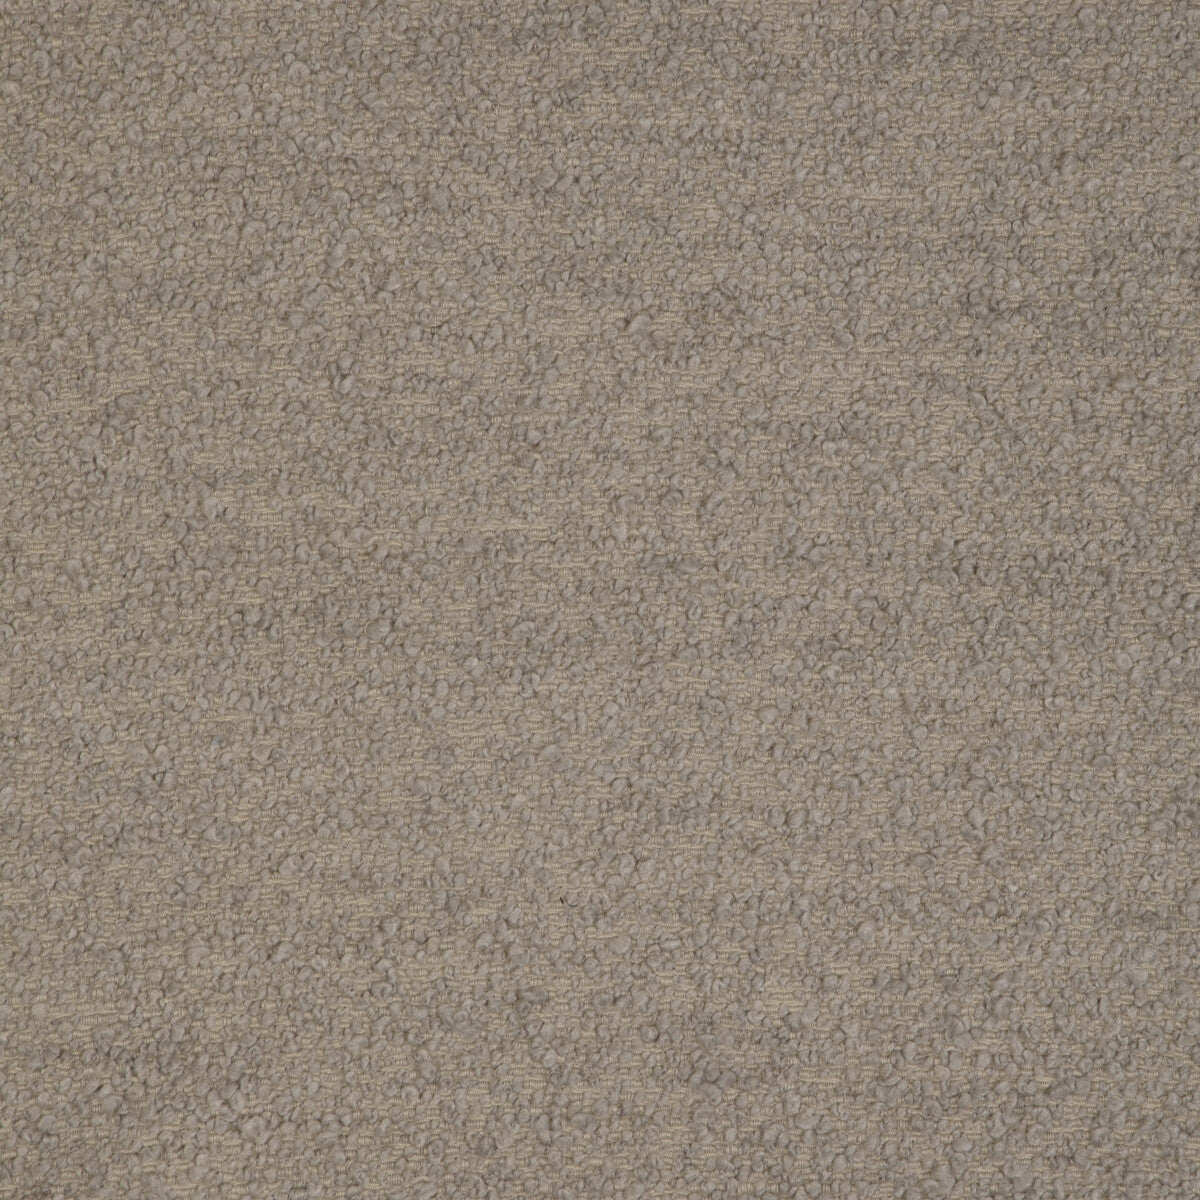 Kravet Smart fabric in 37001-106 color - pattern 37001.106.0 - by Kravet Smart in the Performance Kravetarmor collection